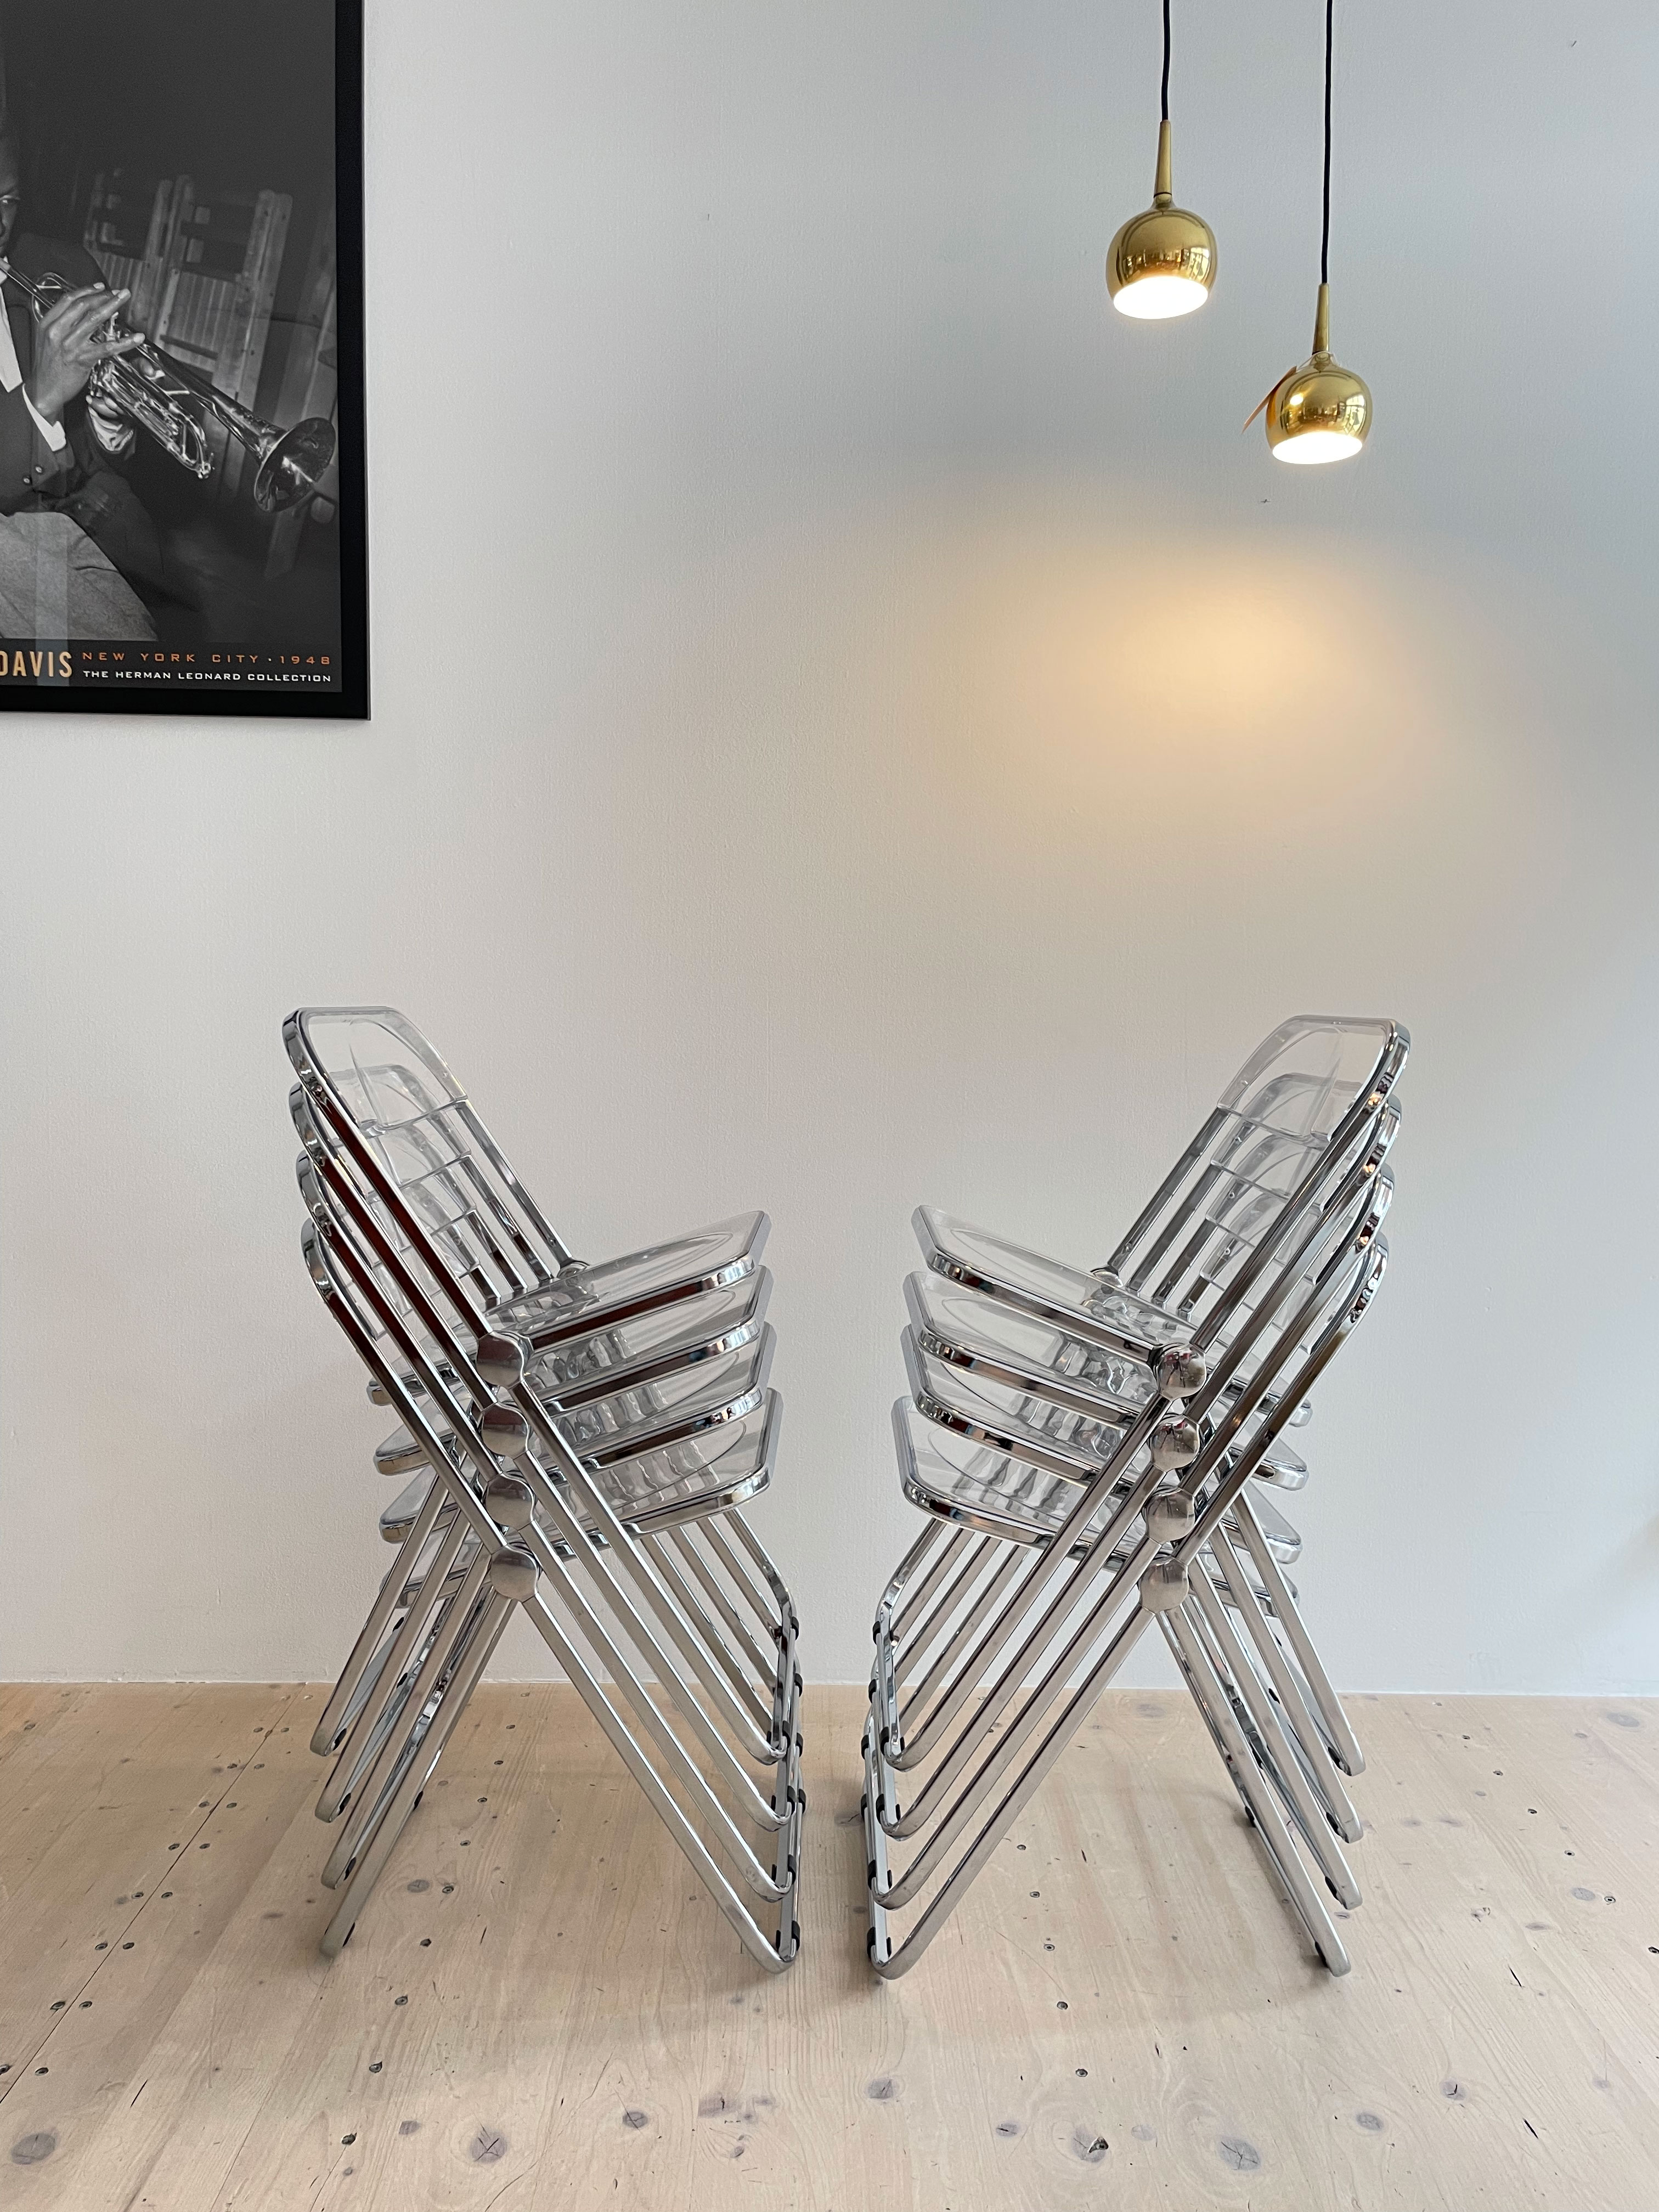 Transparent Plia Folding Chairs by Giancarlo Piretti. Available at heyday möbel, Grubenstrasse 19, 8045 Zürich, Switzerland. Mid-Century Modern Furniture and Other Stuff.